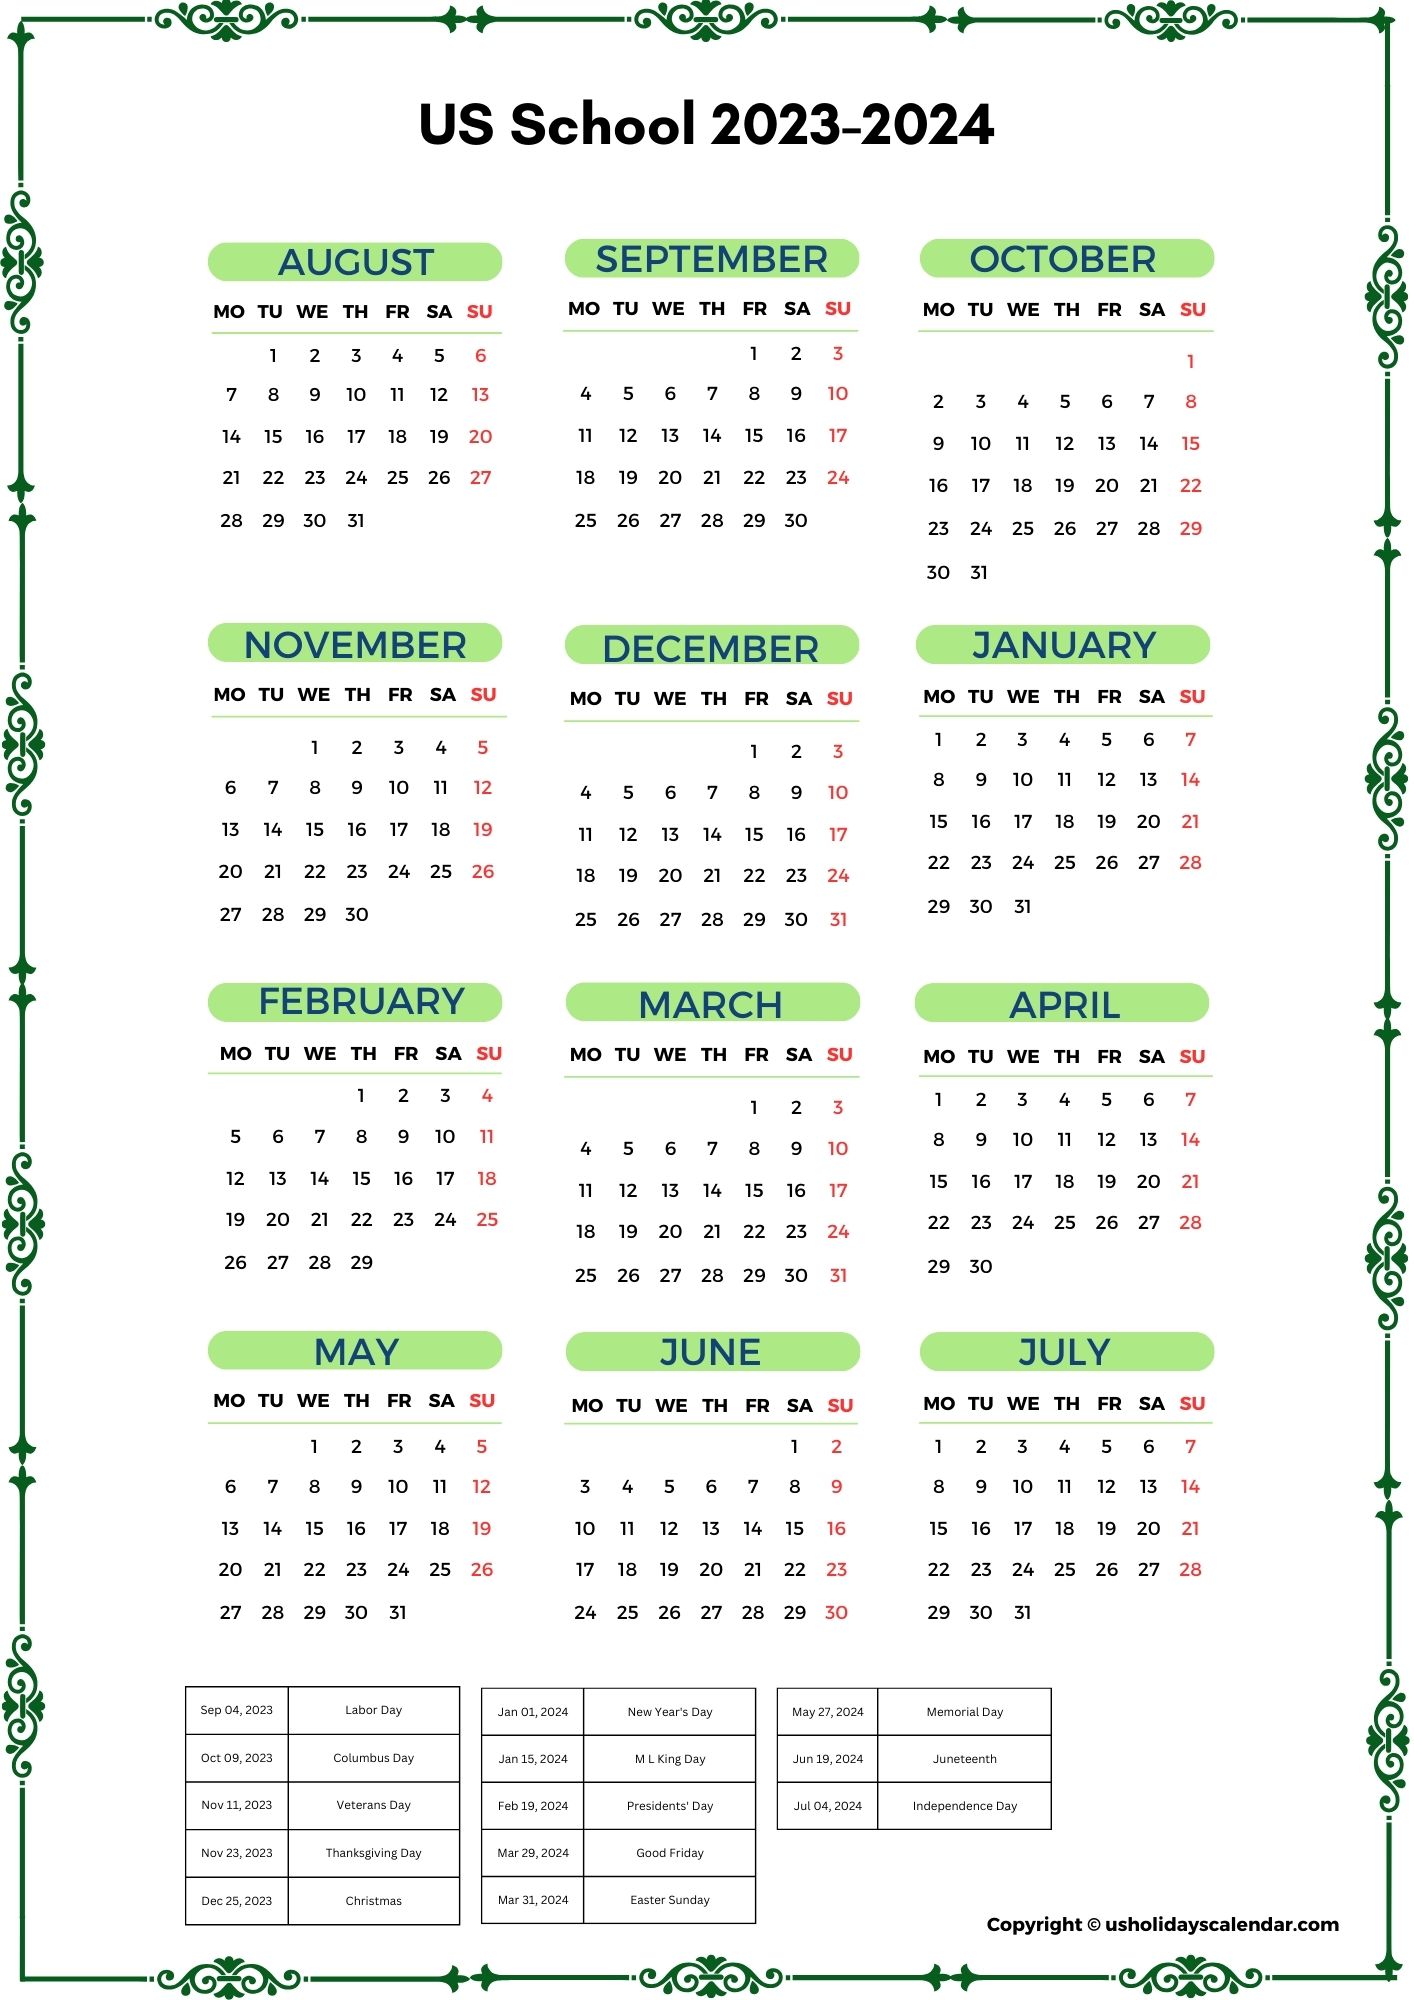 US School Holidays Calendar 2023